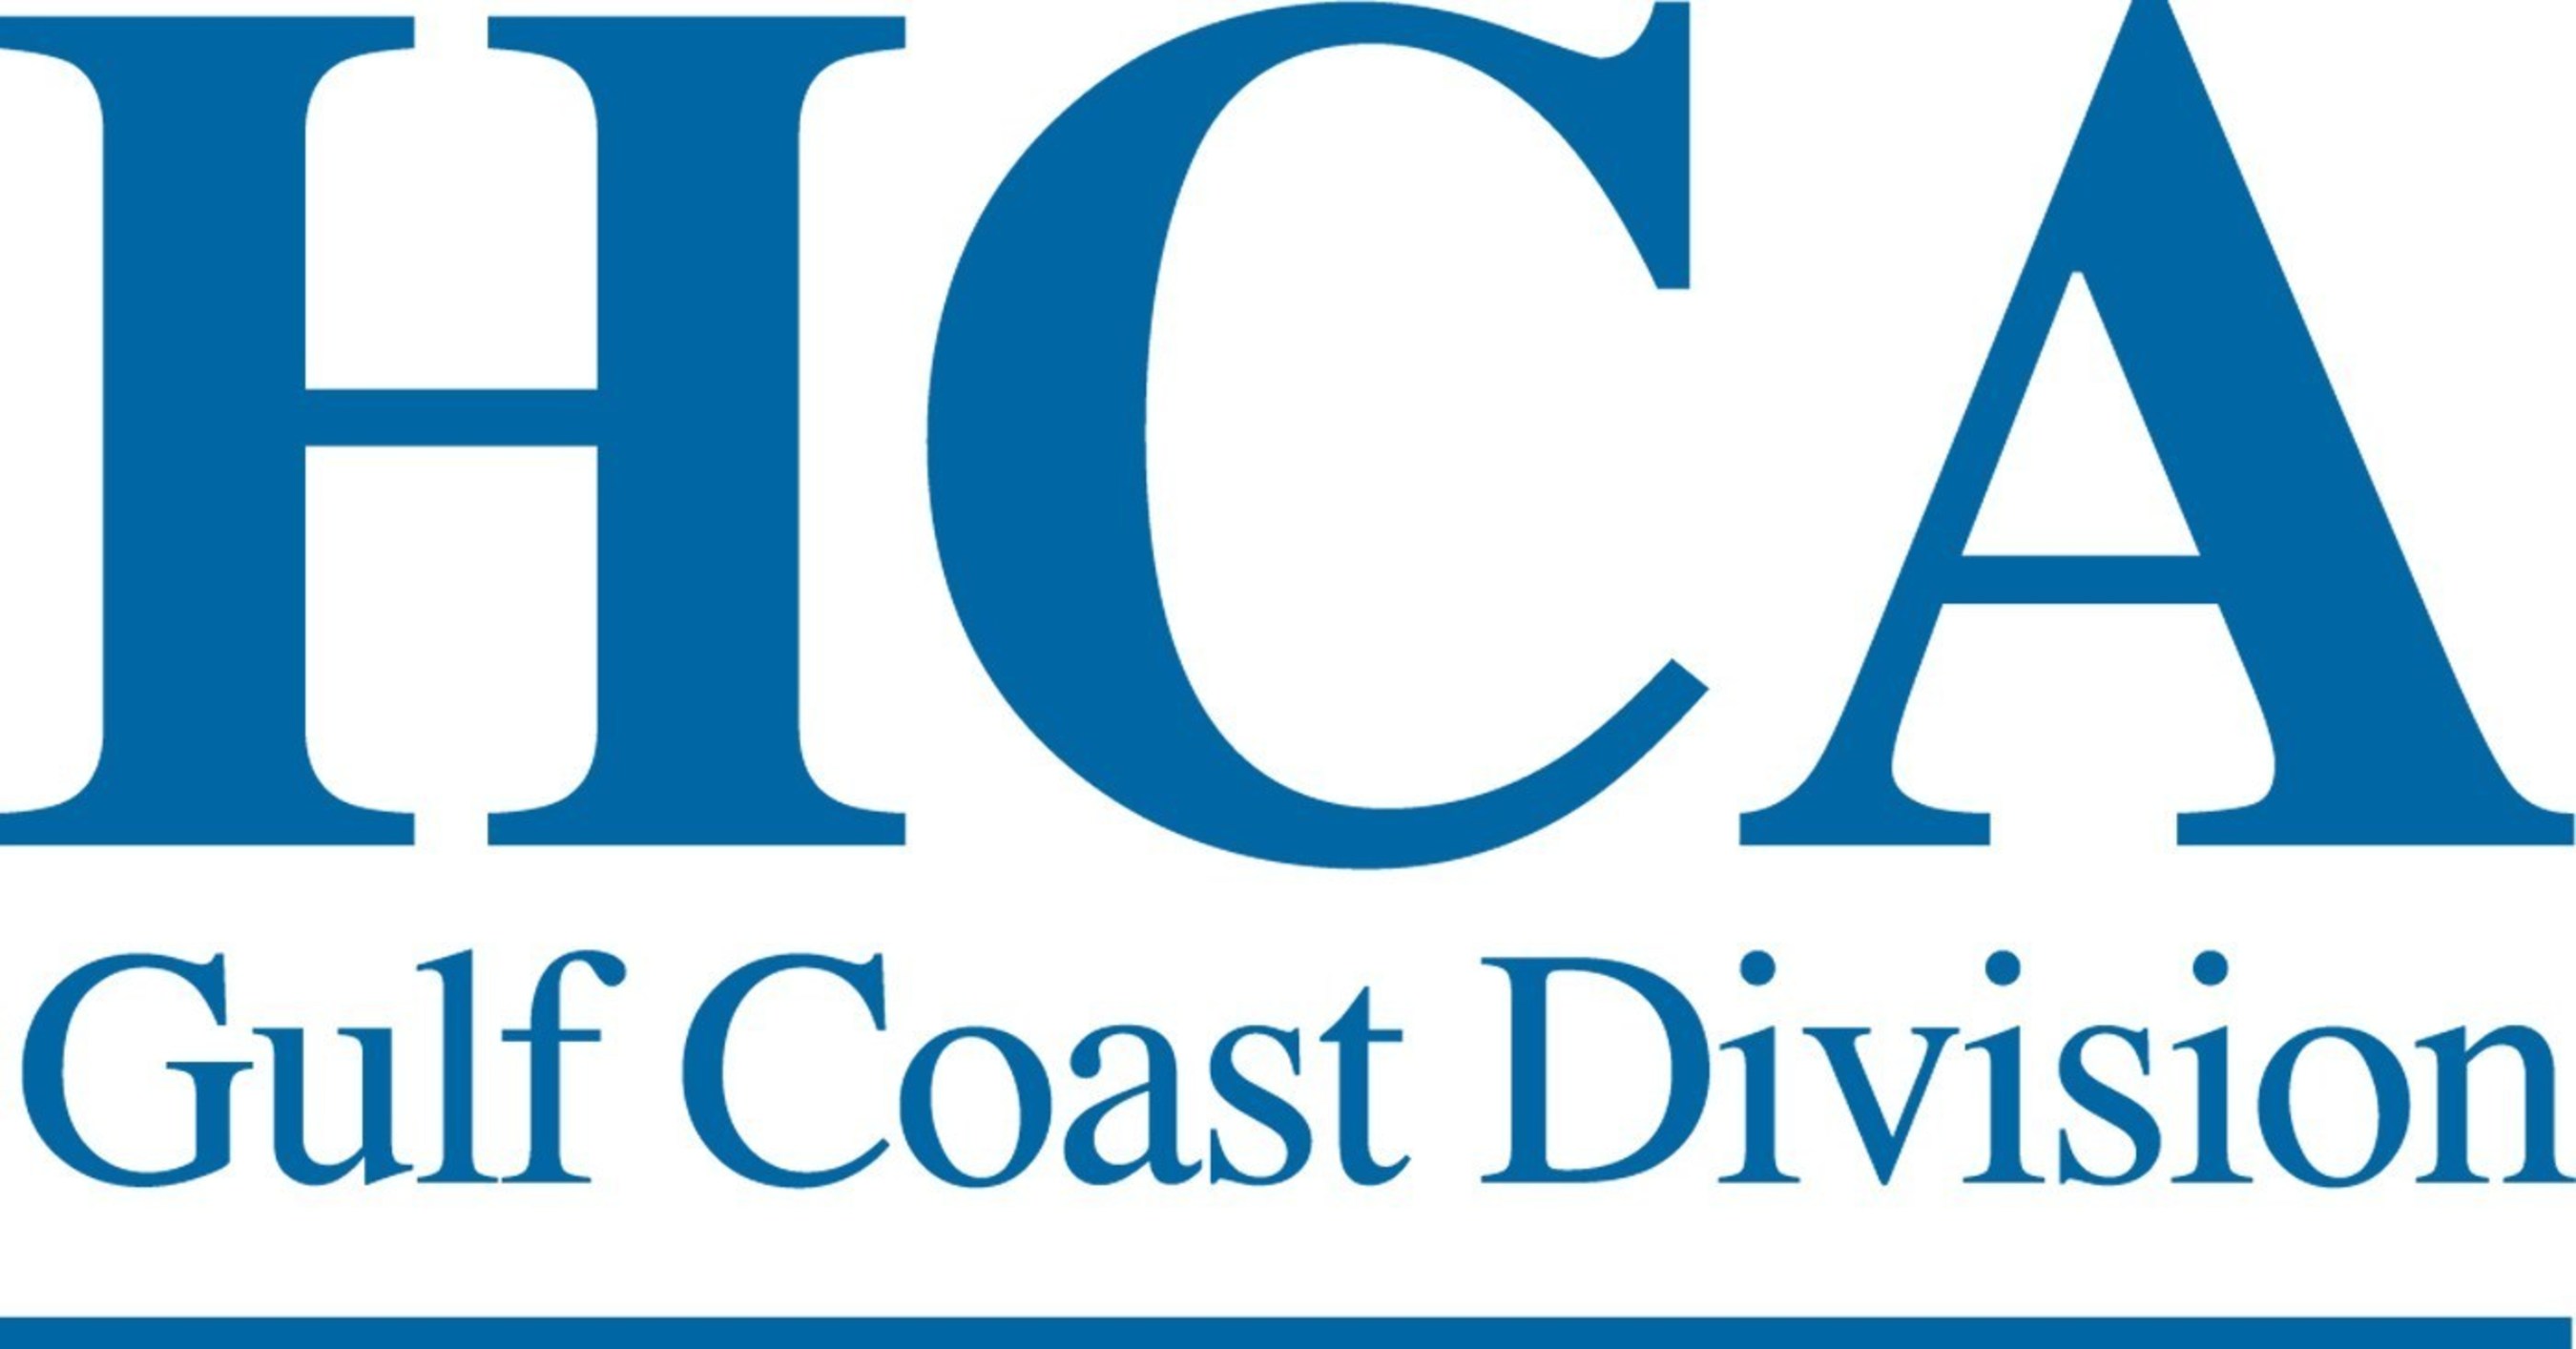 HCA Gulf Coast Division logo